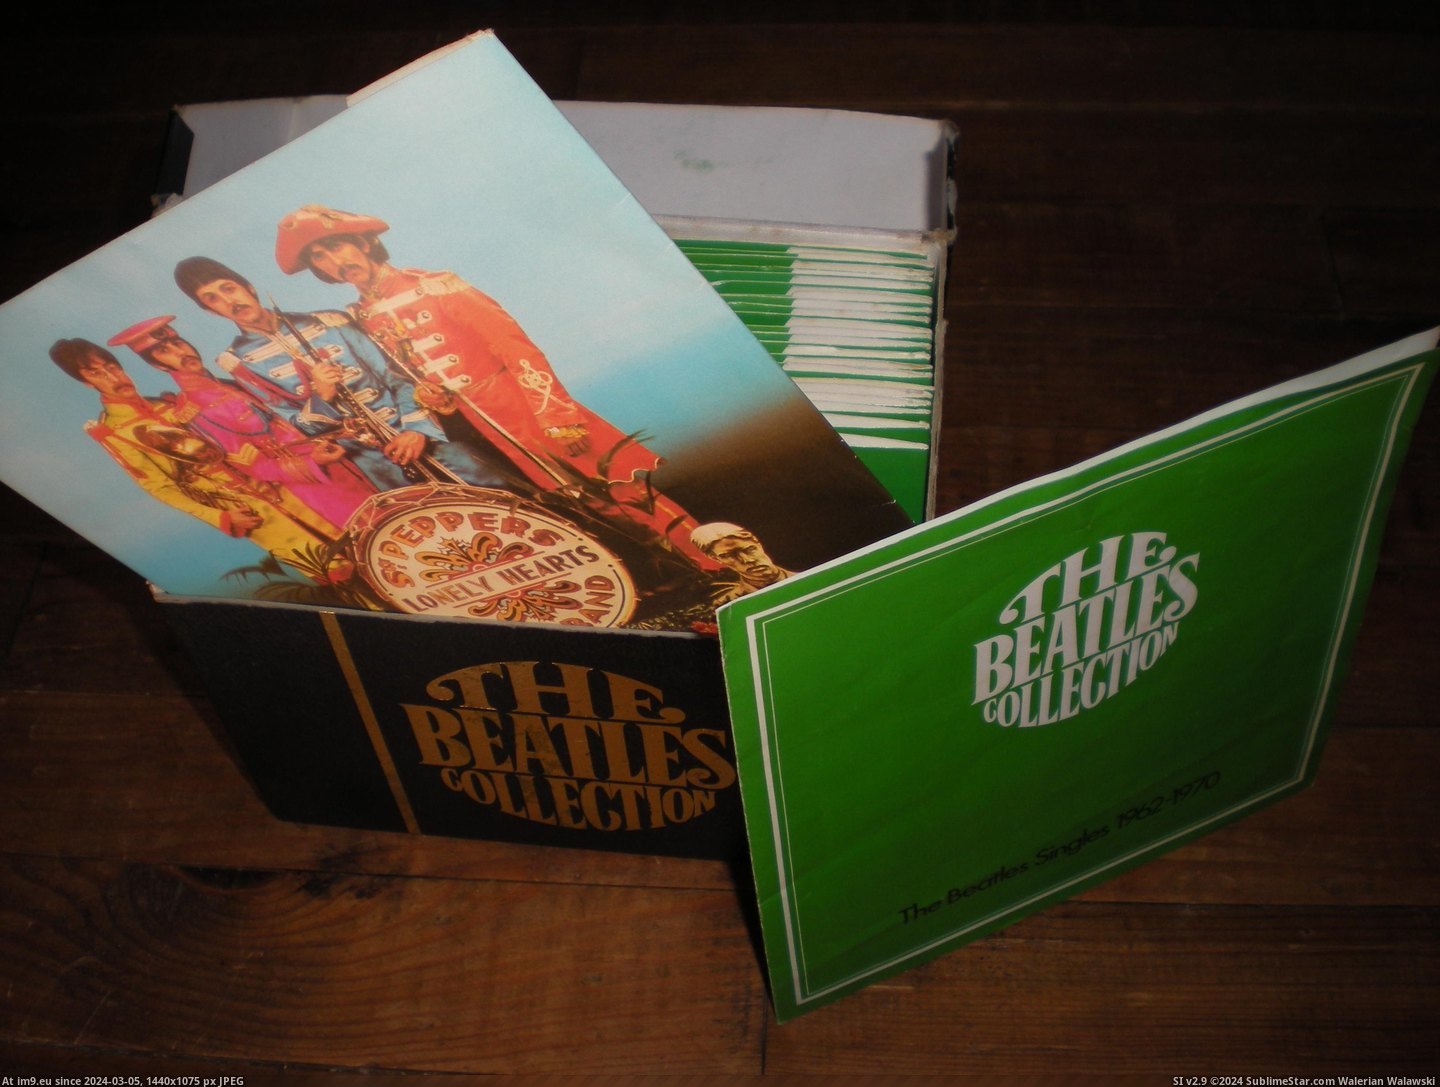 #Collection #Beatles #Box Beatles Collection Box 2 Pic. (Изображение из альбом new 1))